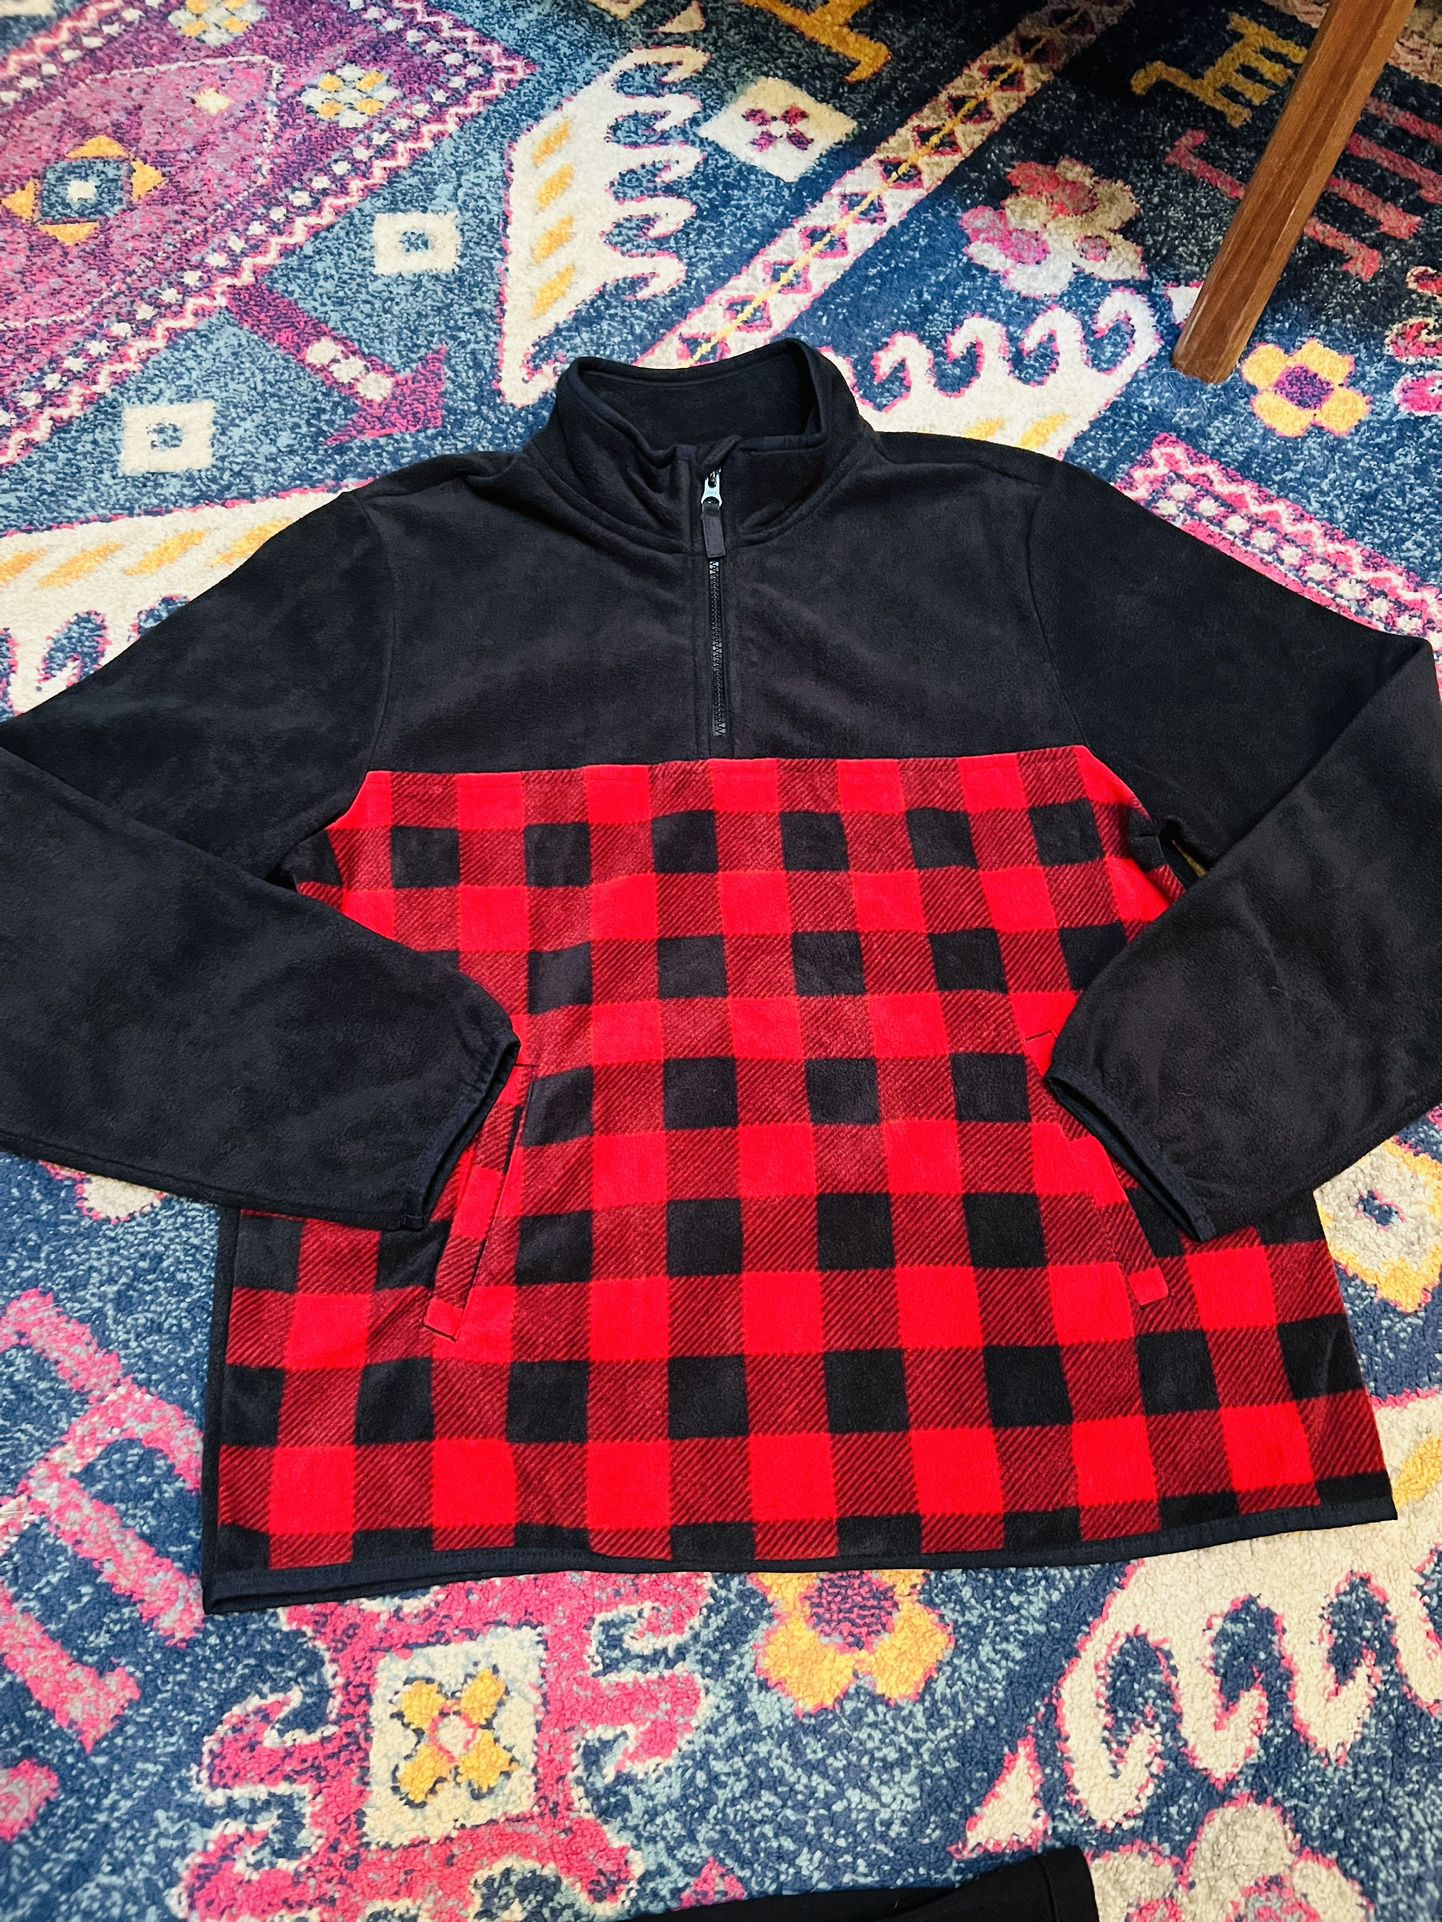 New Pullover  Fleece Jacket Youth XXL (18)